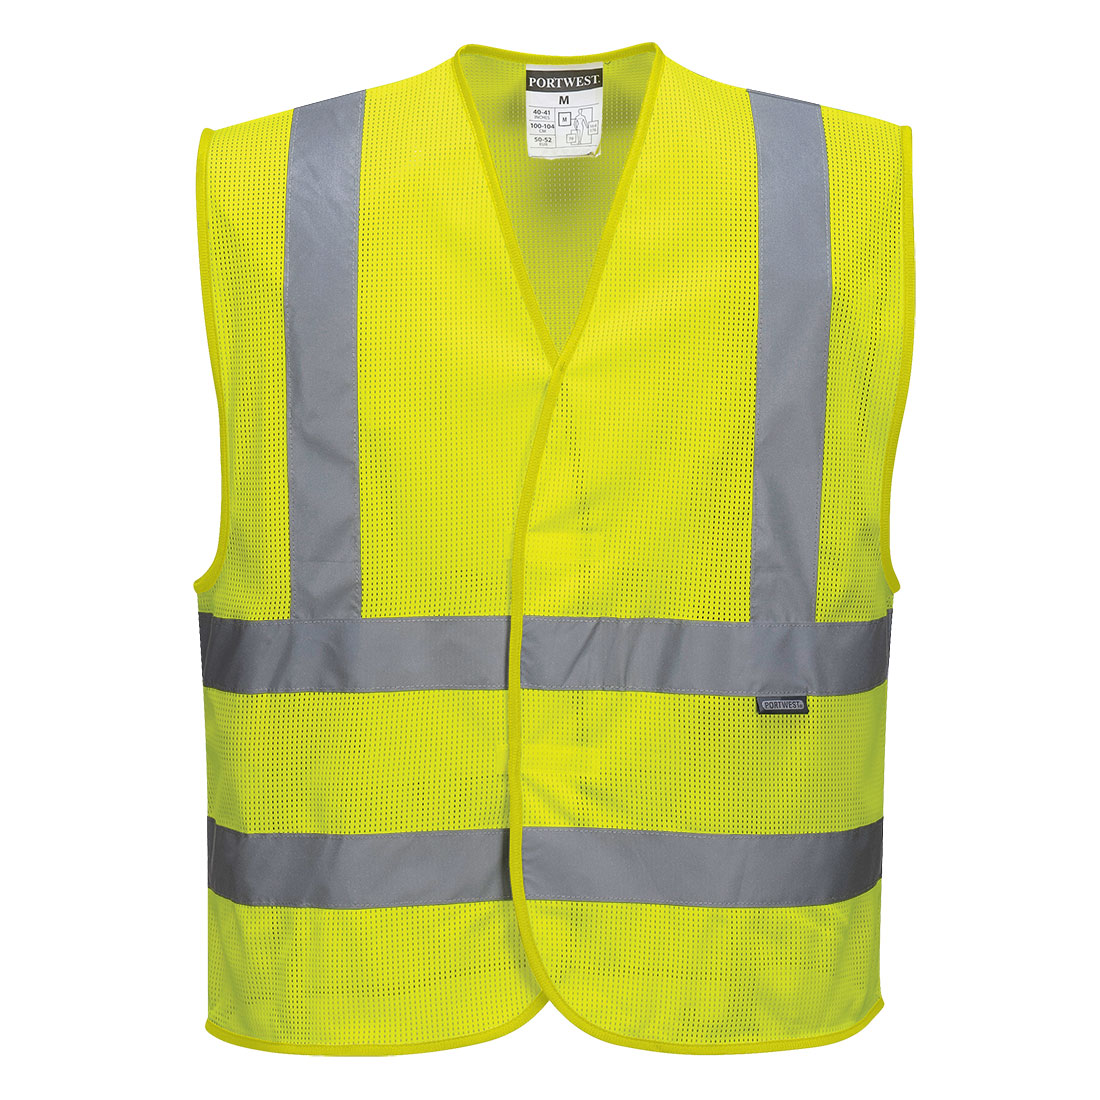 MeshAir Band & Brace Vest Size 4X/5X Yellow